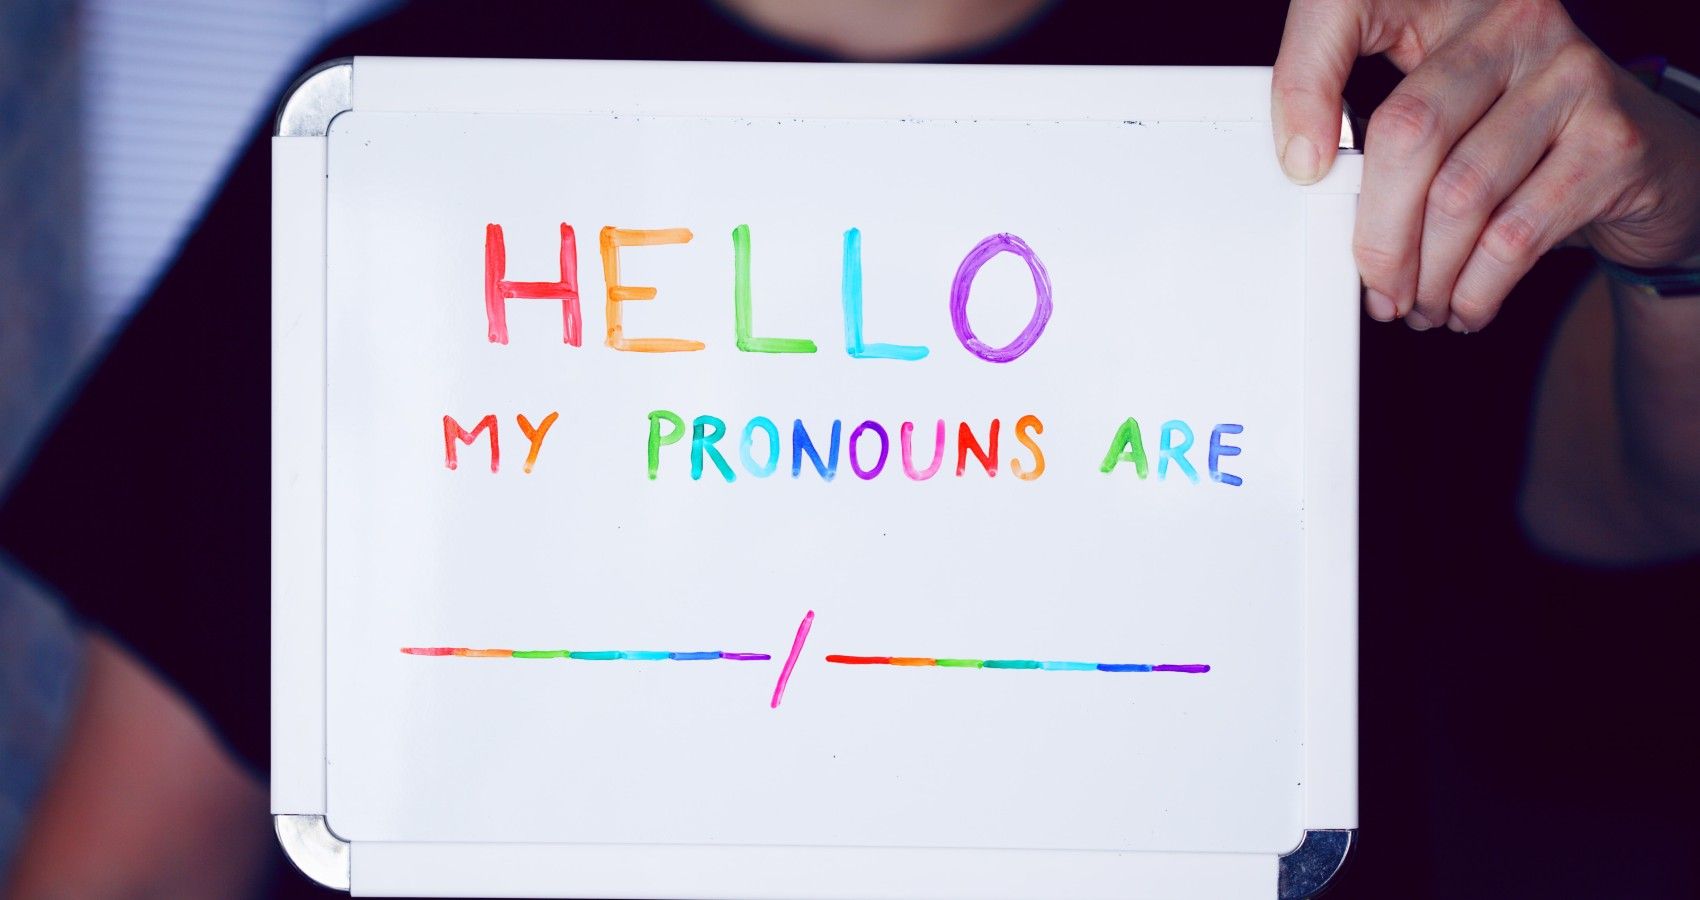 A person holding up a pronoun sign